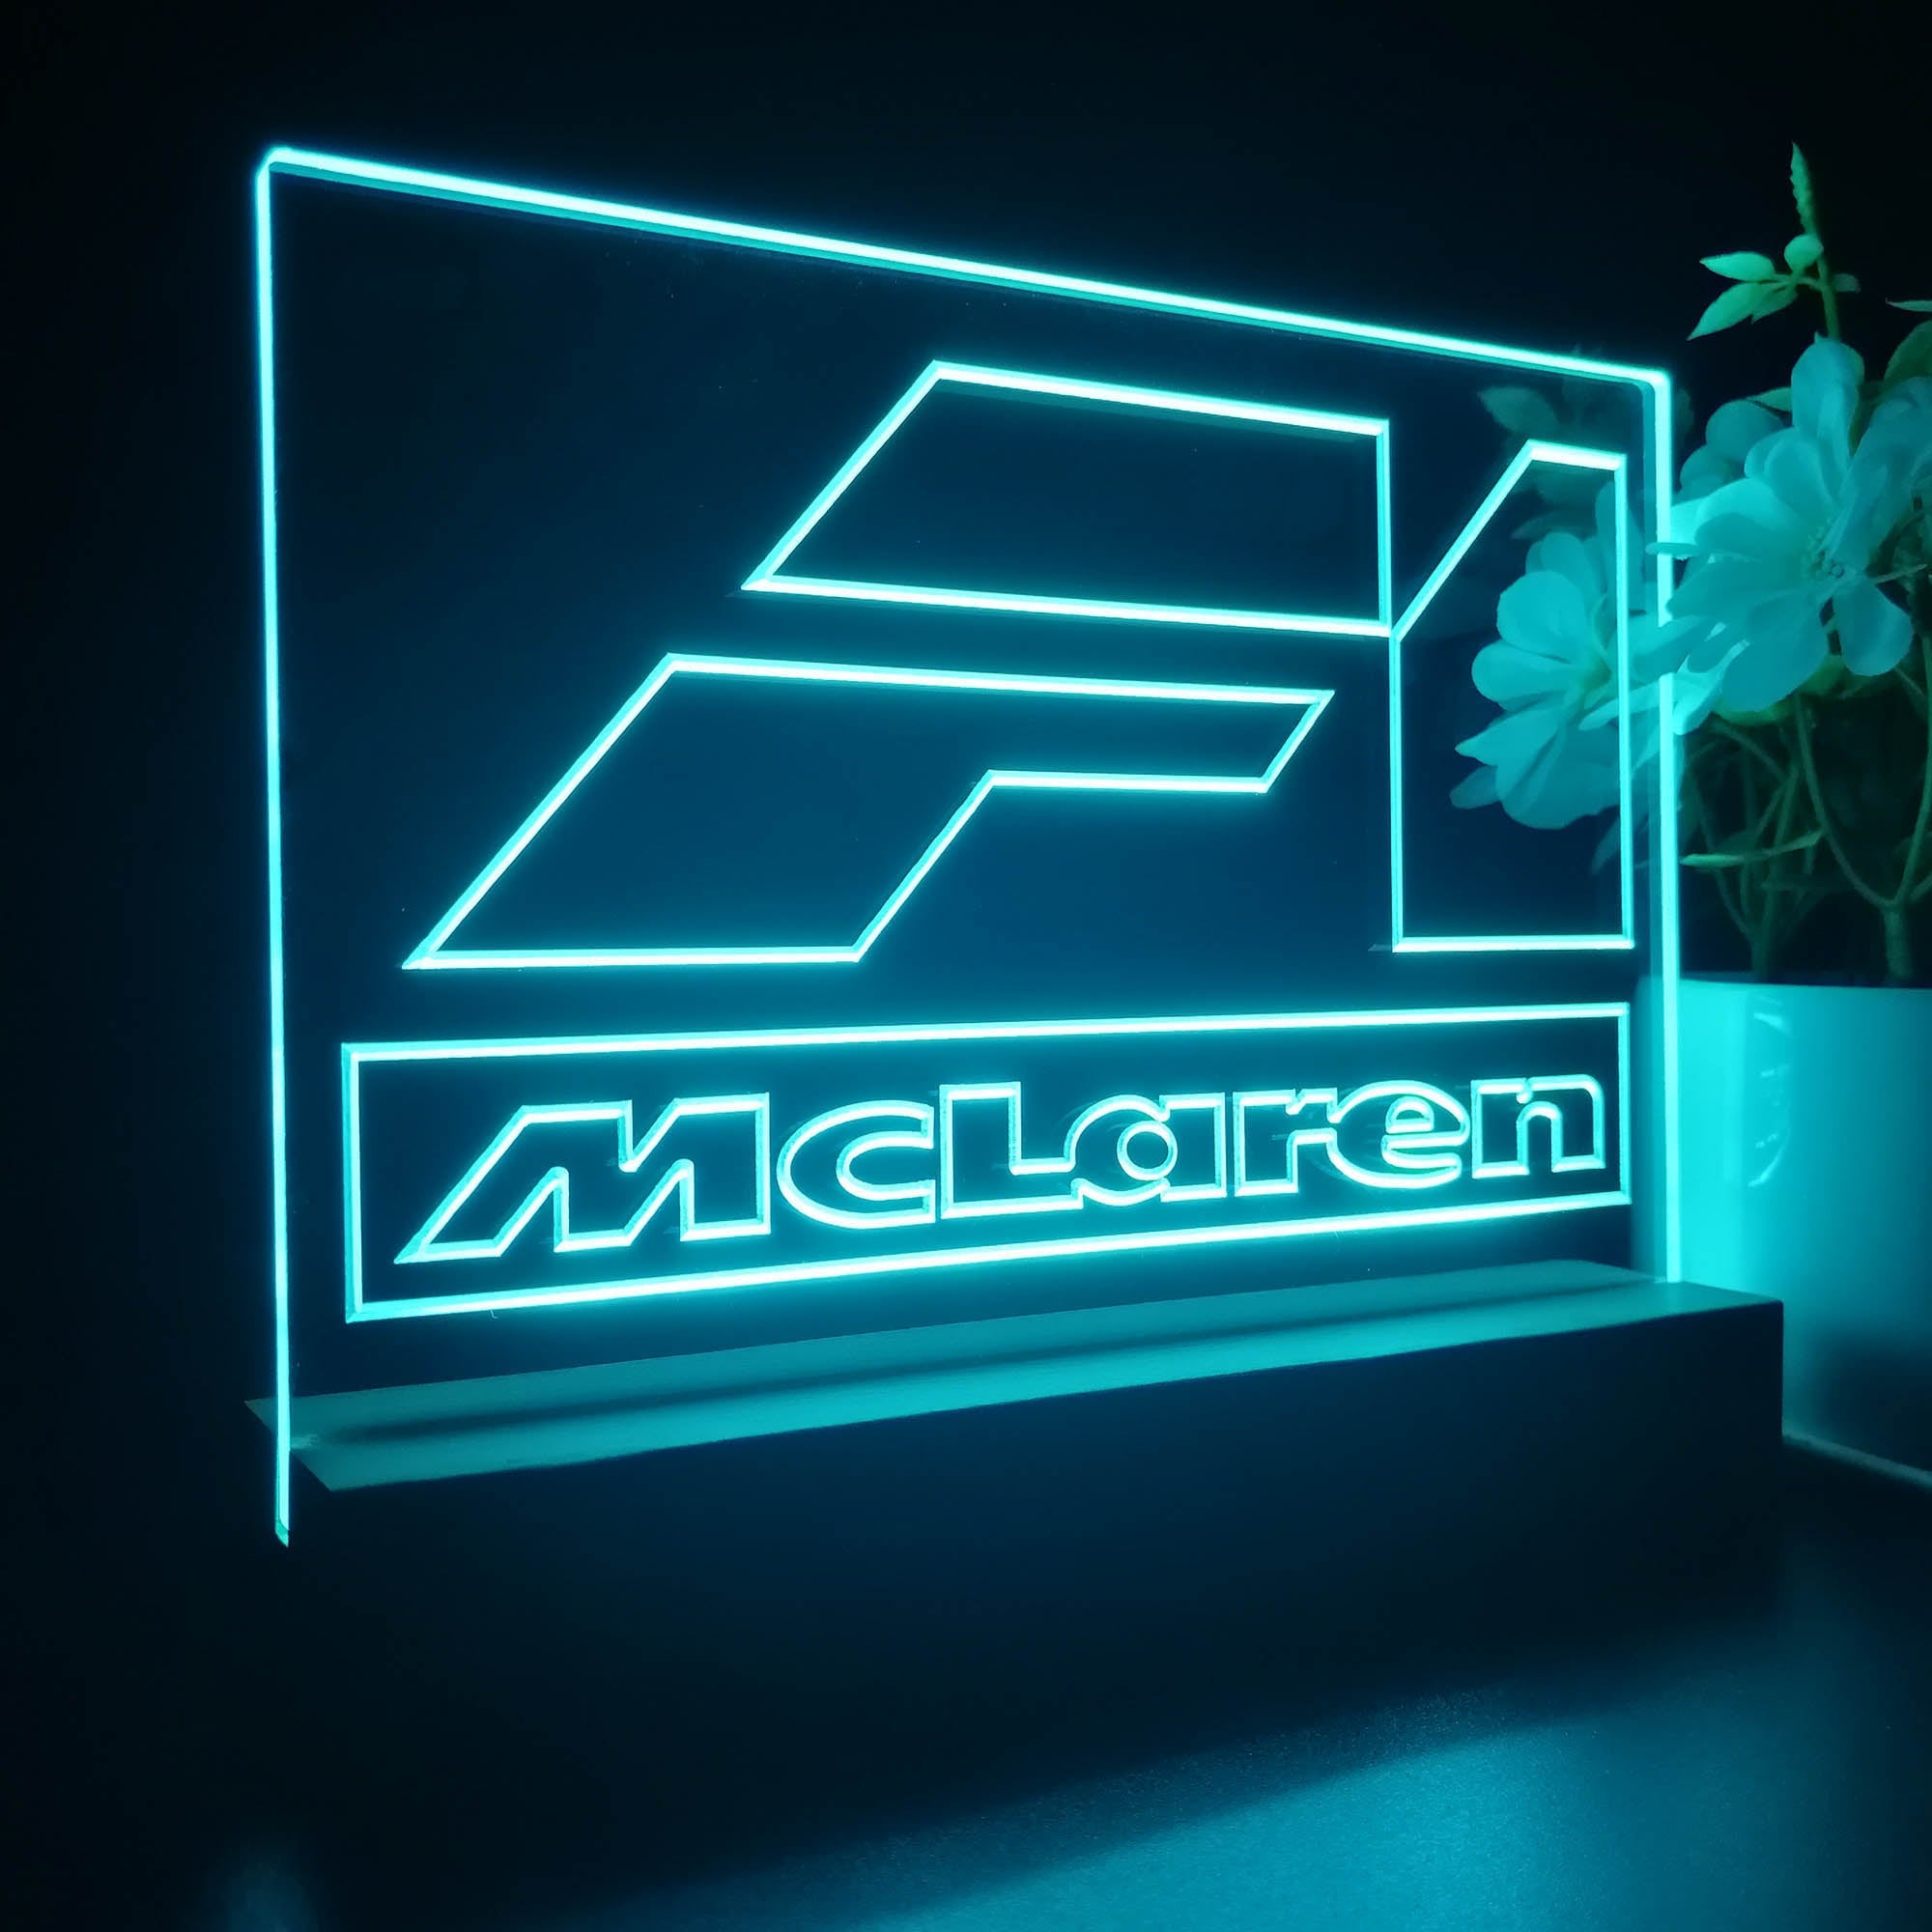 Mclaren F1 Car 3D Illusion Night Light Desk Lamp